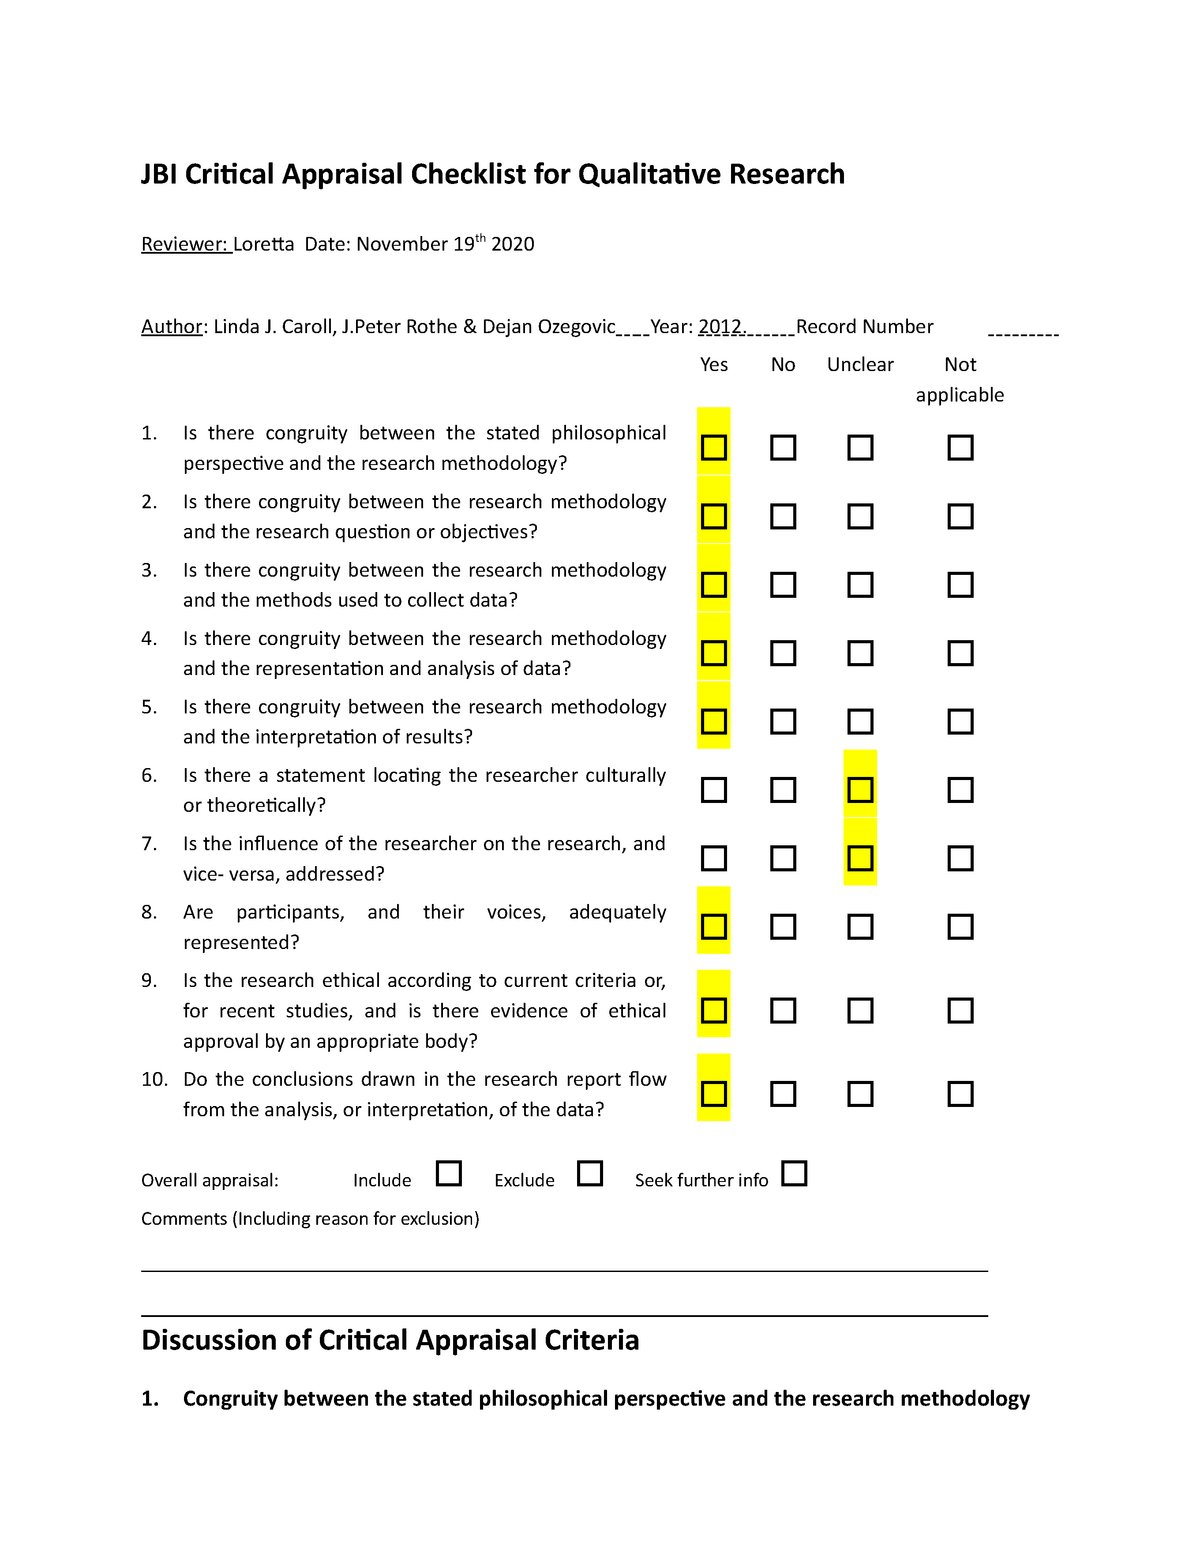 jbi critical appraisal checklist for qualitative research 2020